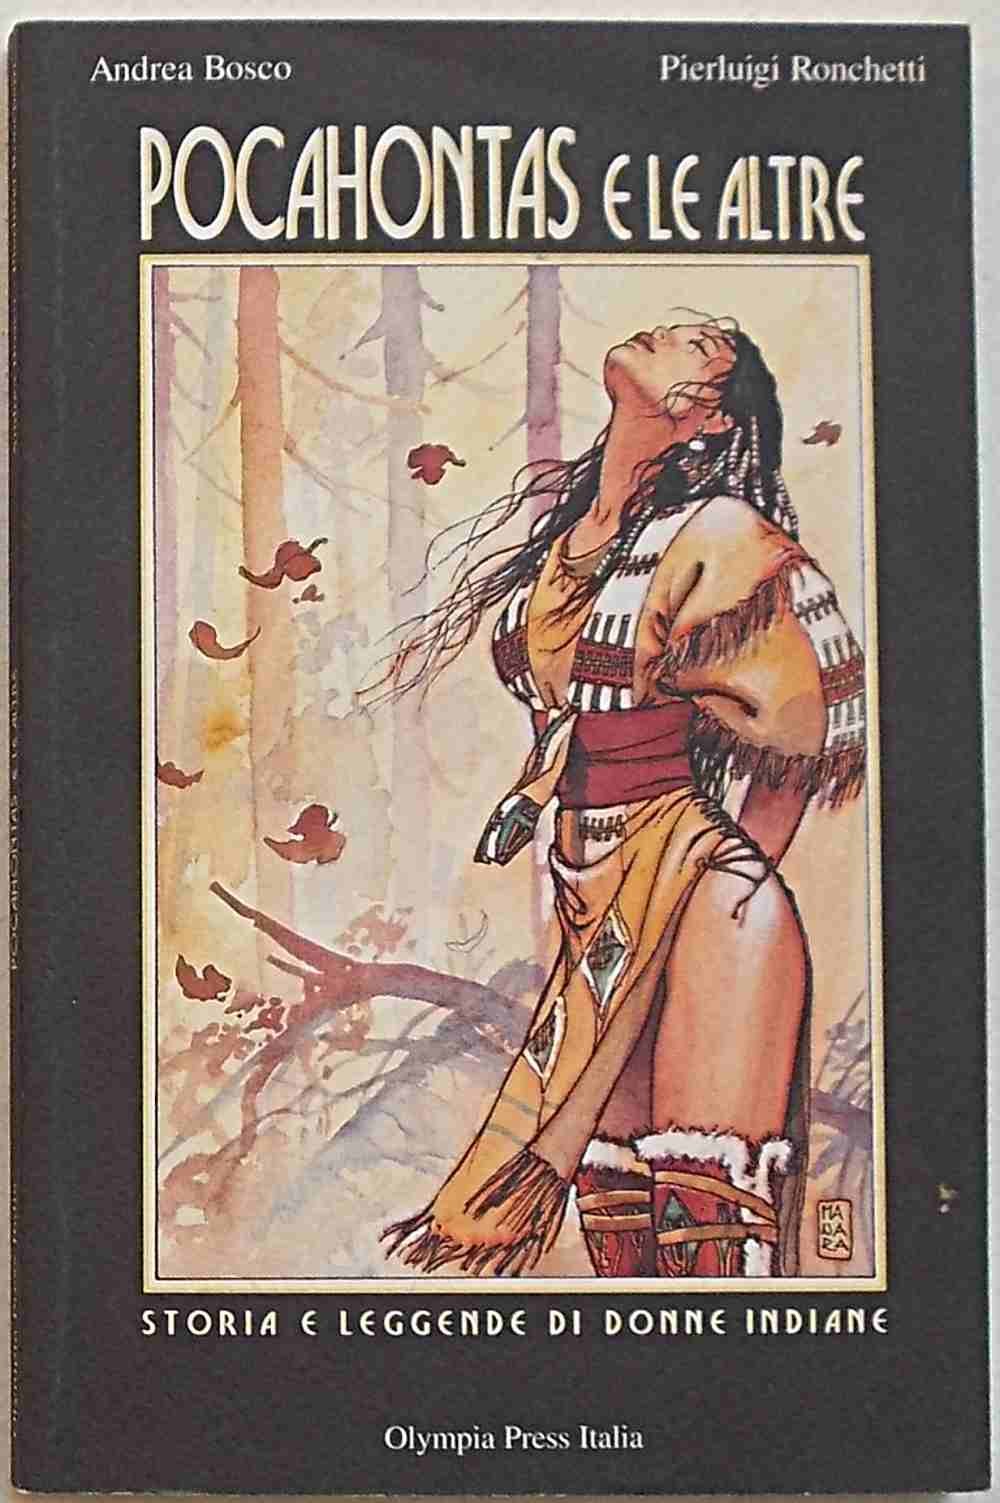 Copertina di Pocahontas e le altre